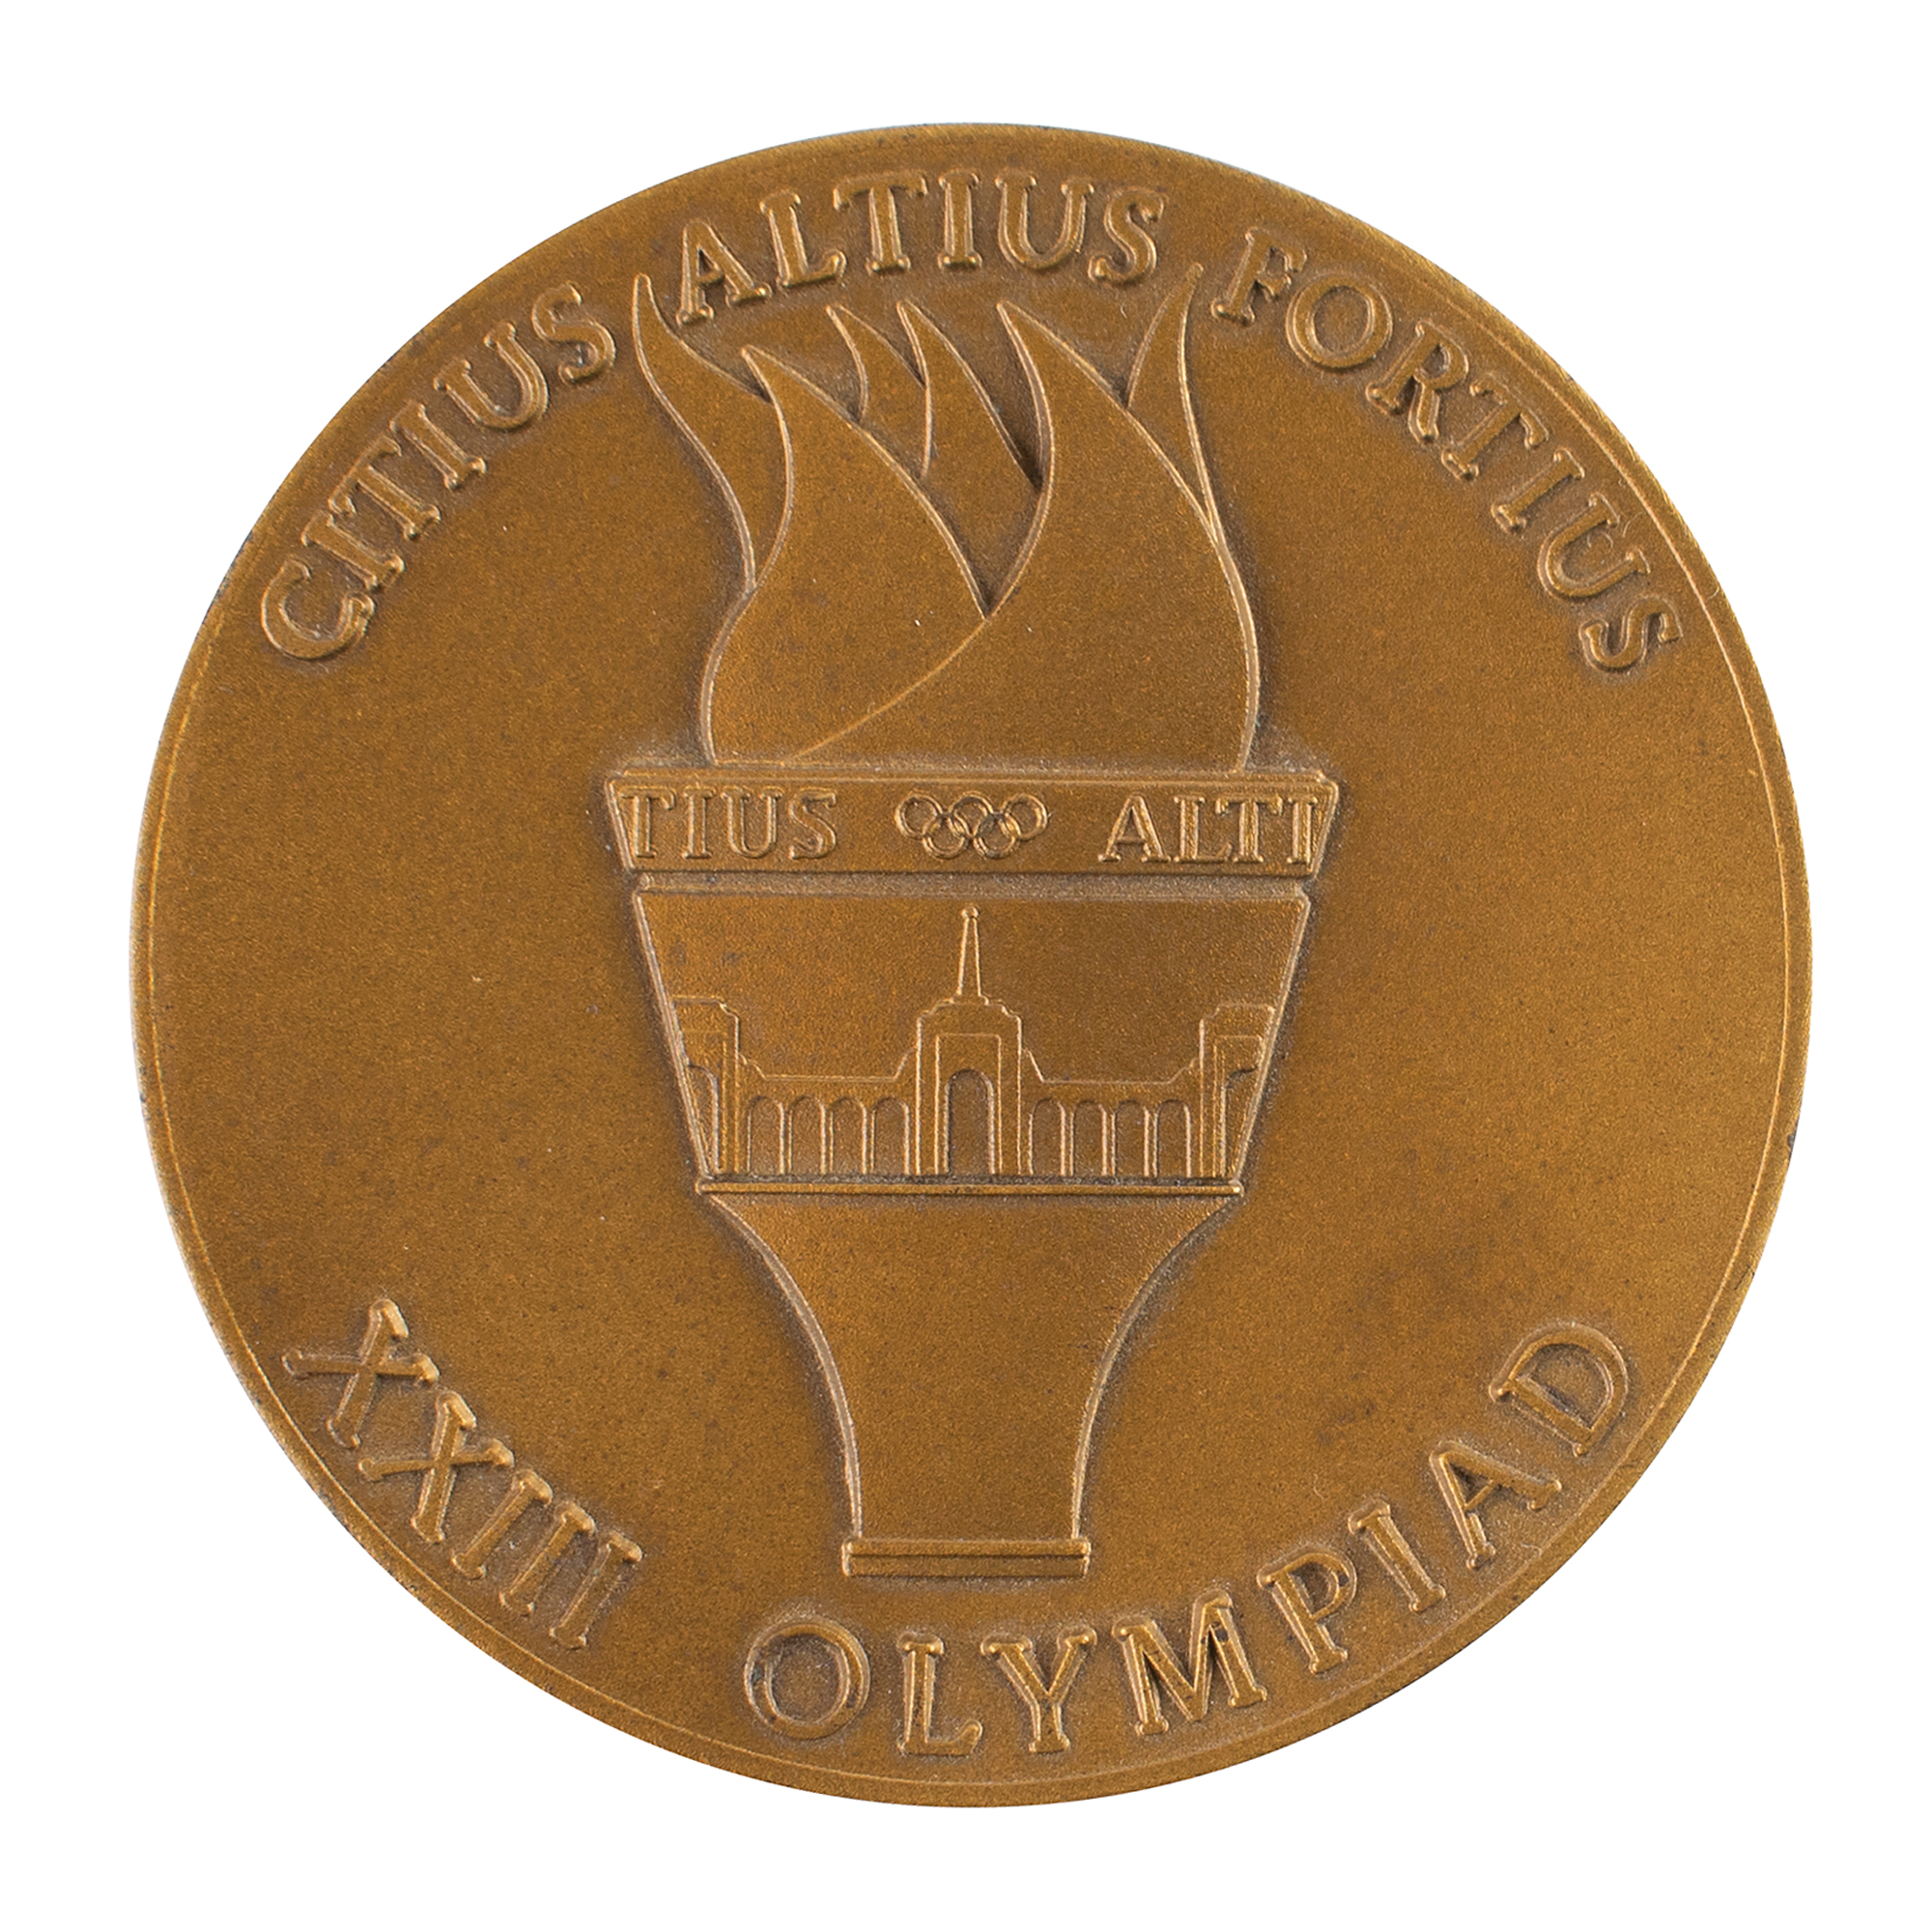 Lot #6126 Los Angeles 1984 Summer Olympics Participation Medal